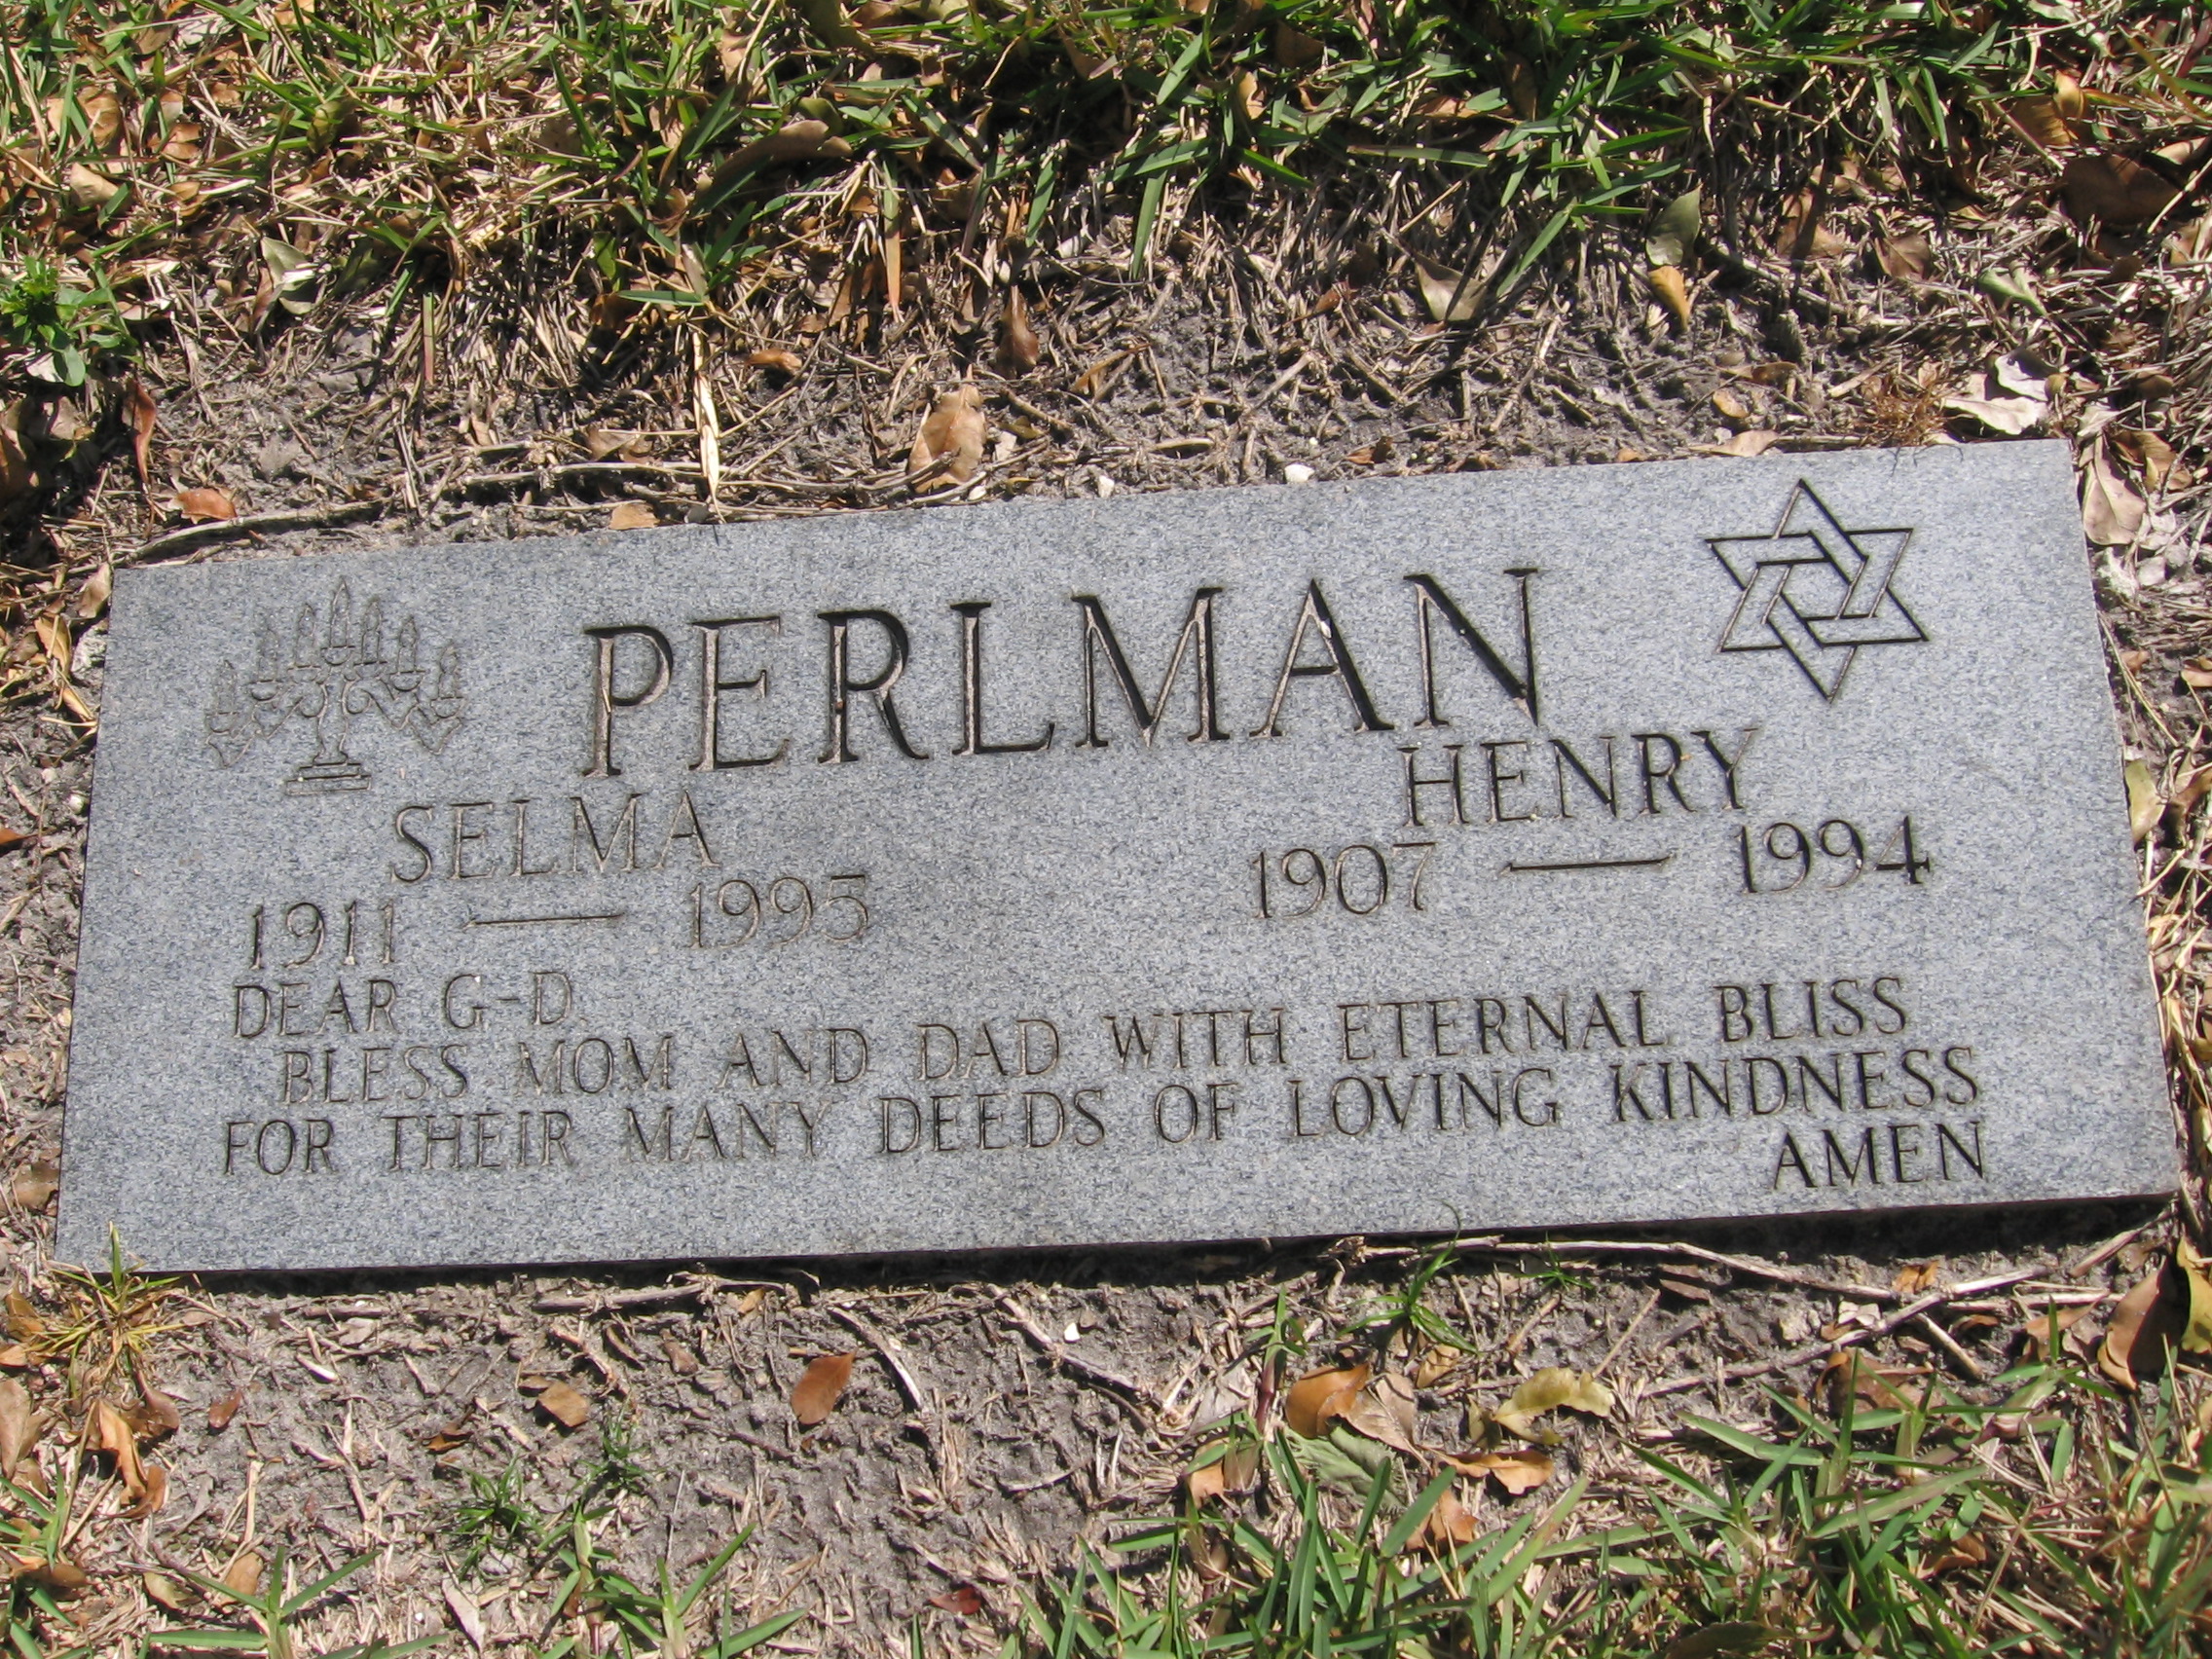 Selma Perlman